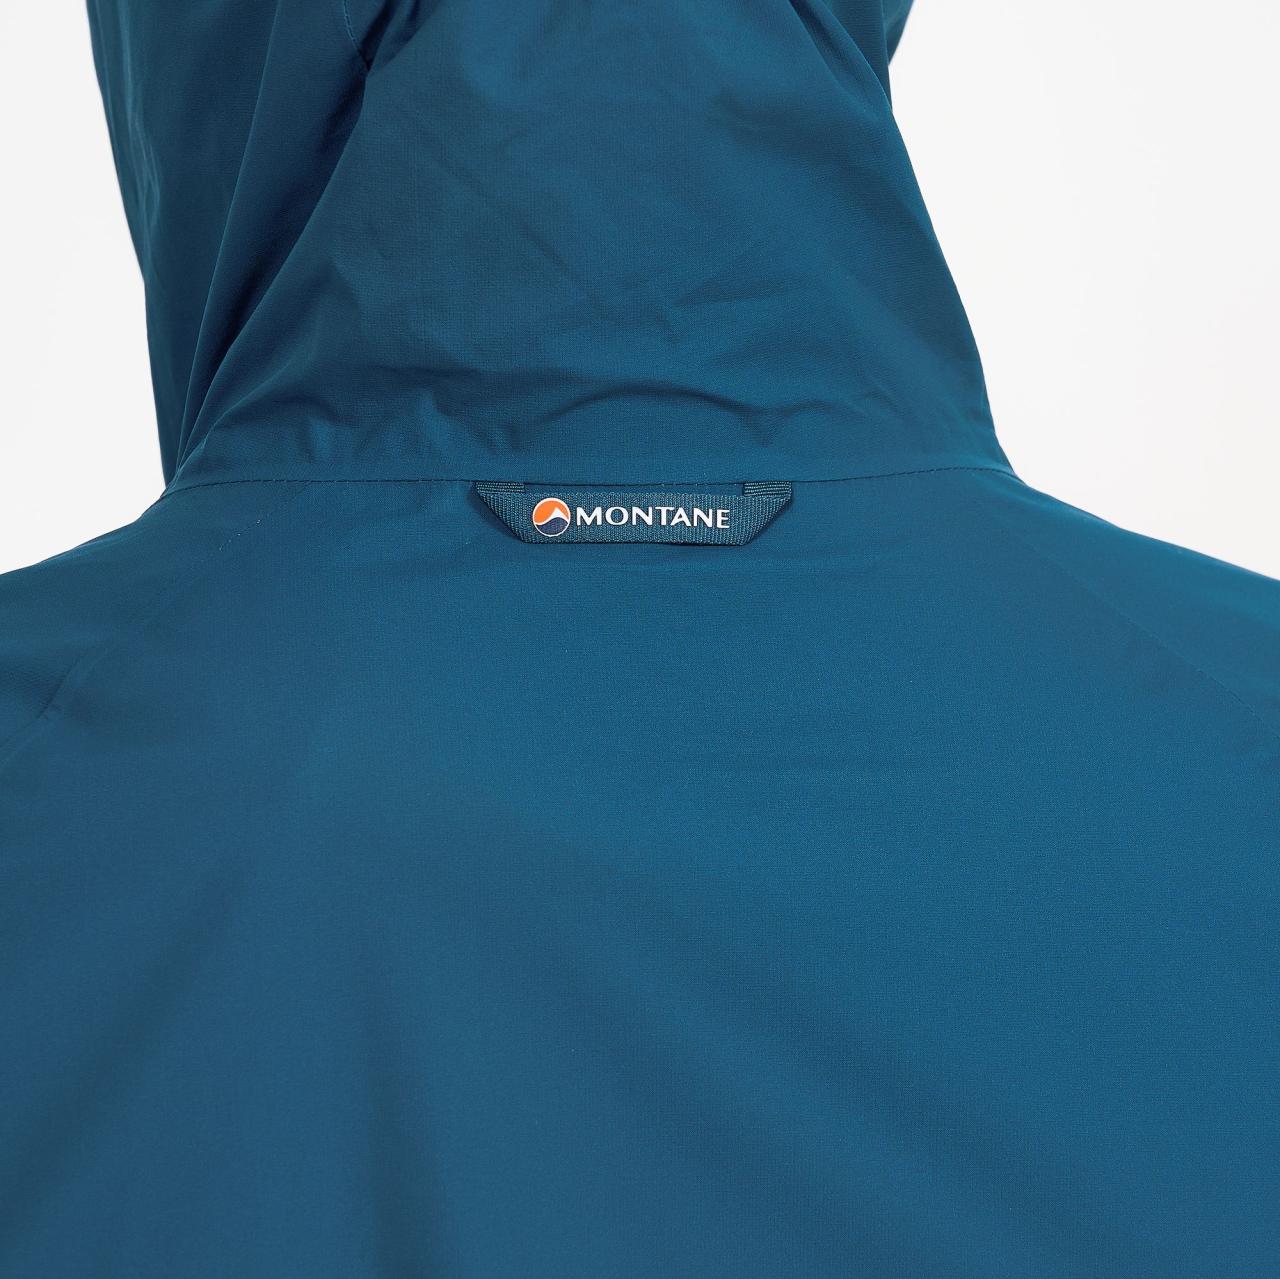 FEM MINIMUS STRETCH ULTRA JKT-NARWHAL BLUE-UK10/S dámská bunda modrá